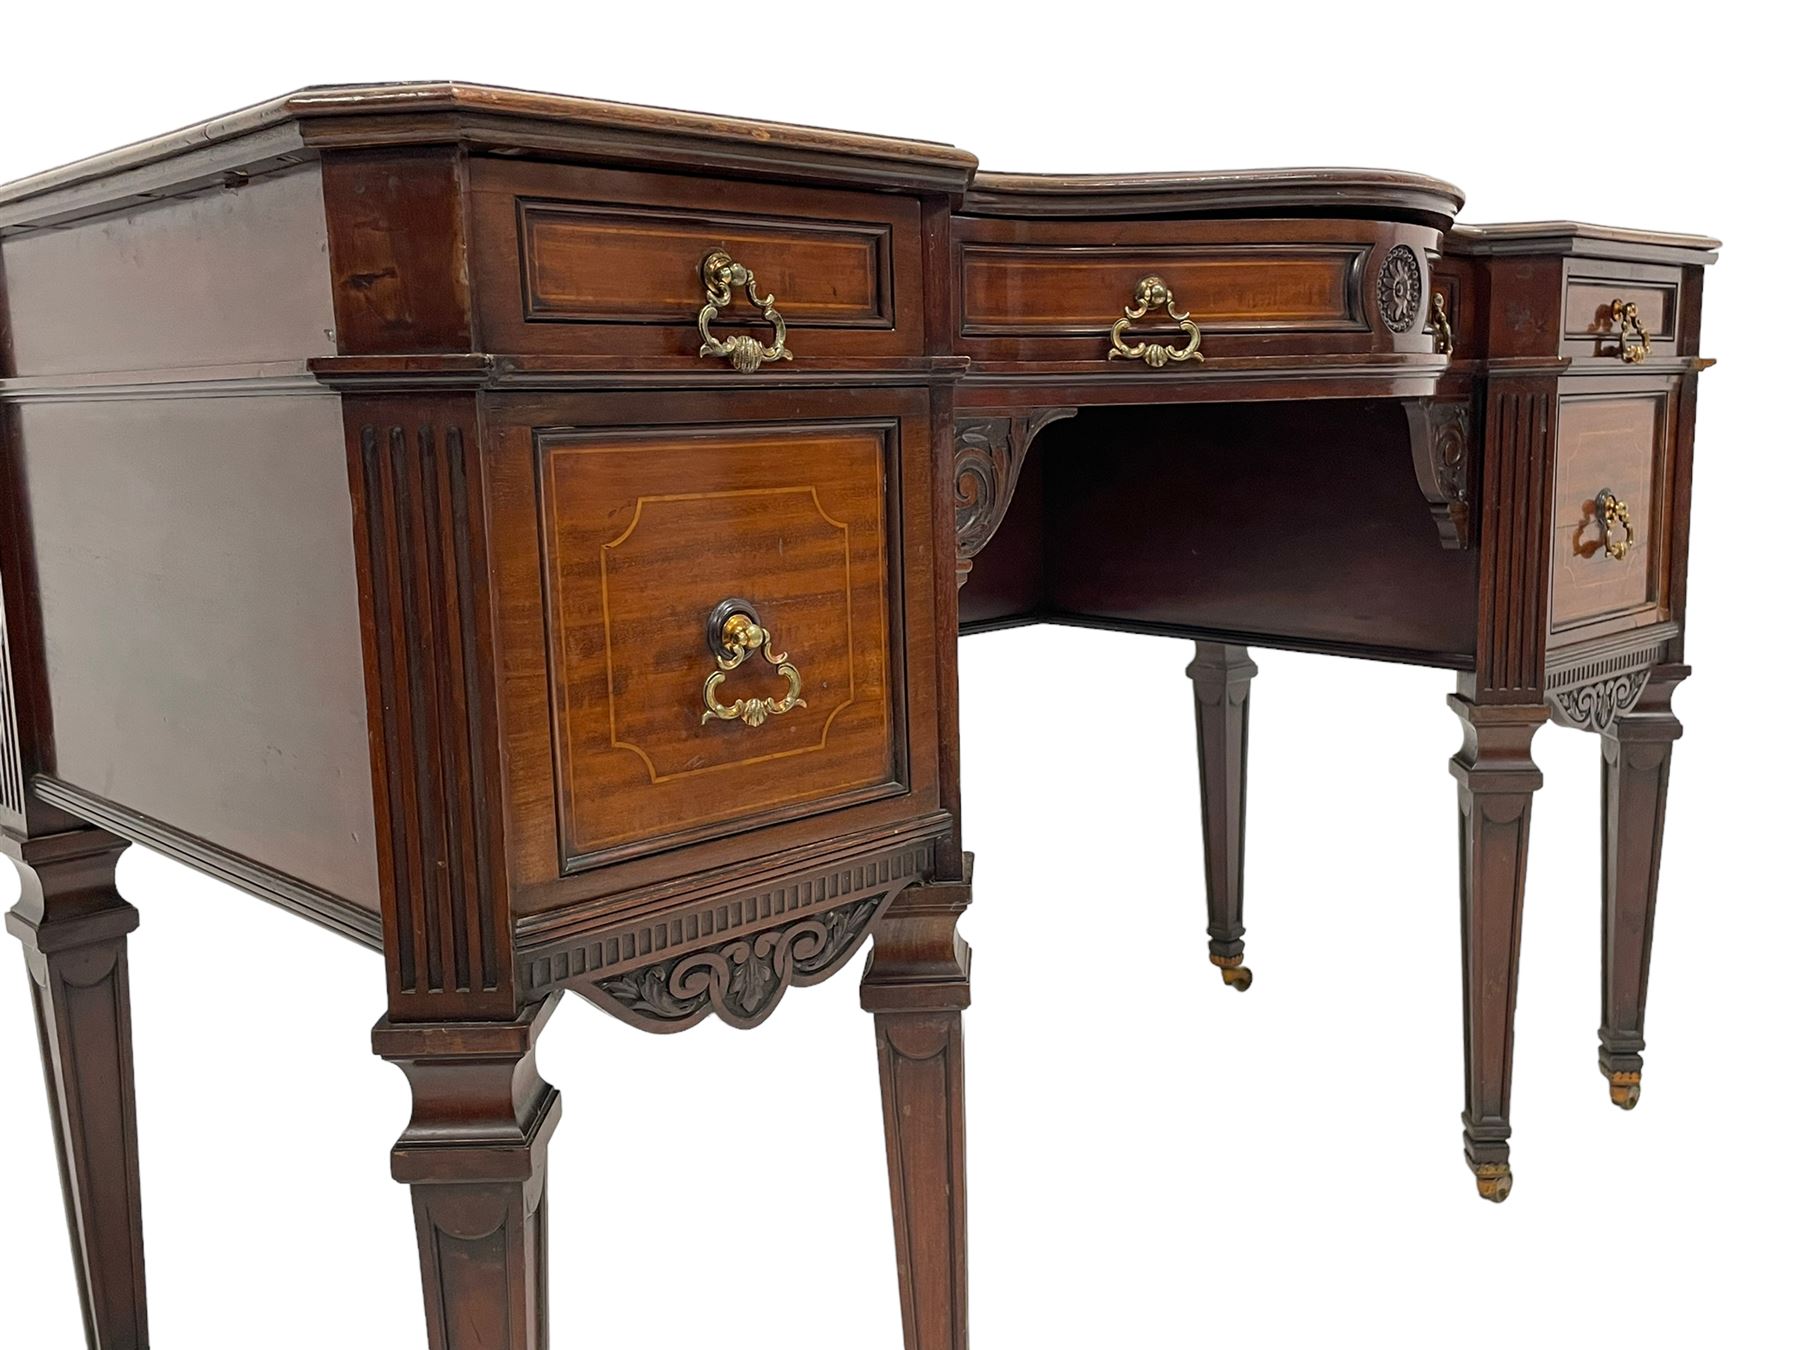 Late 19th century mahogany writing desk - Image 6 of 18